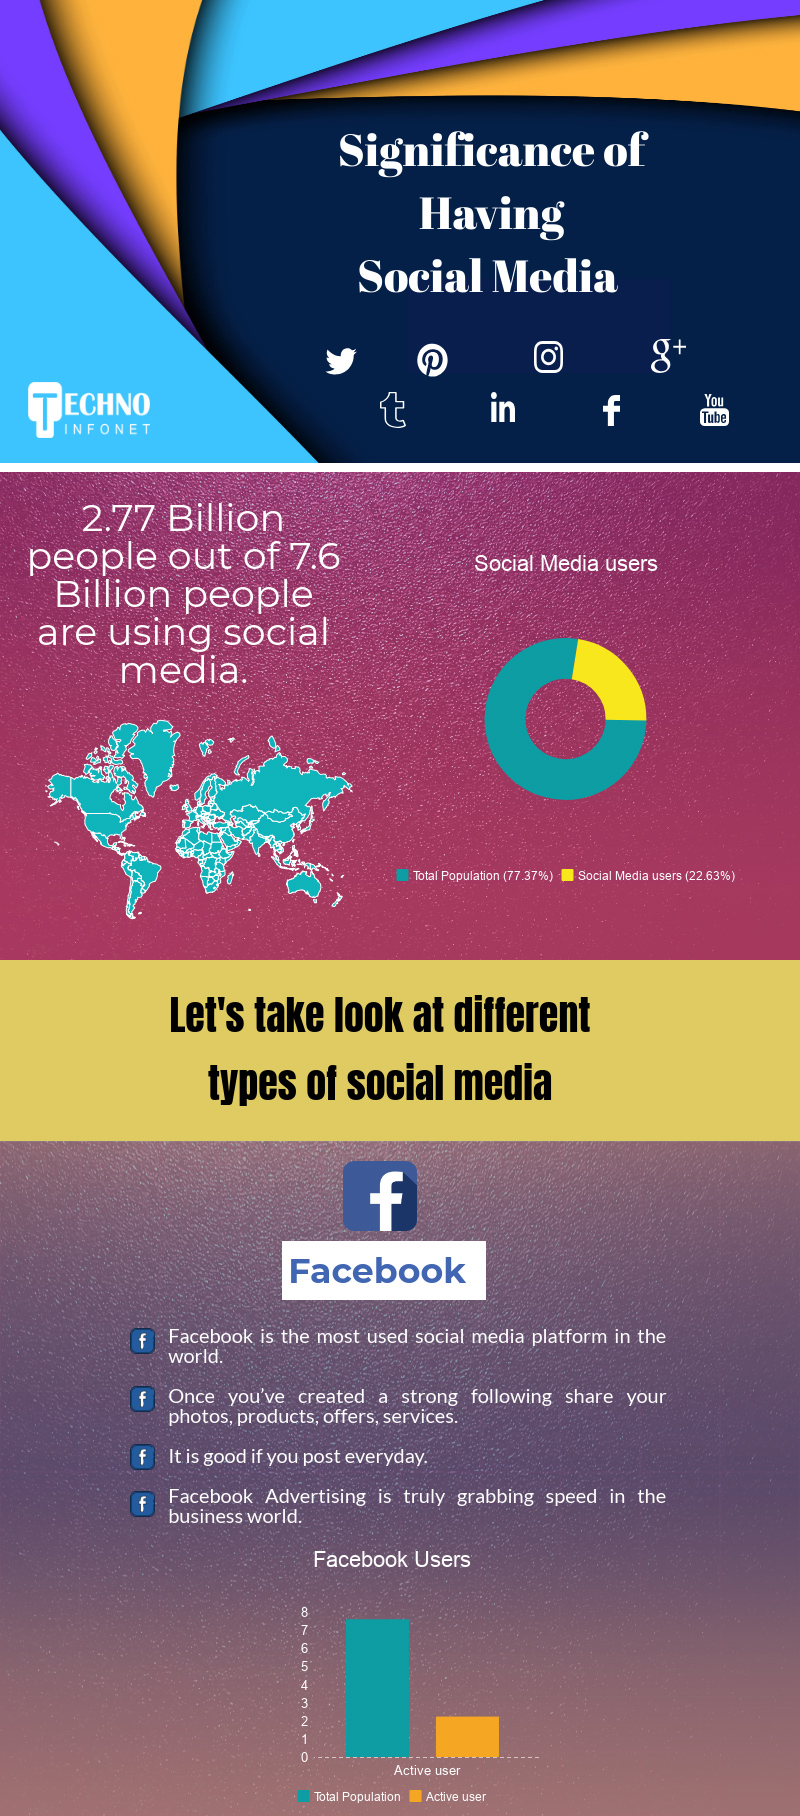 Significance of Having Social Media